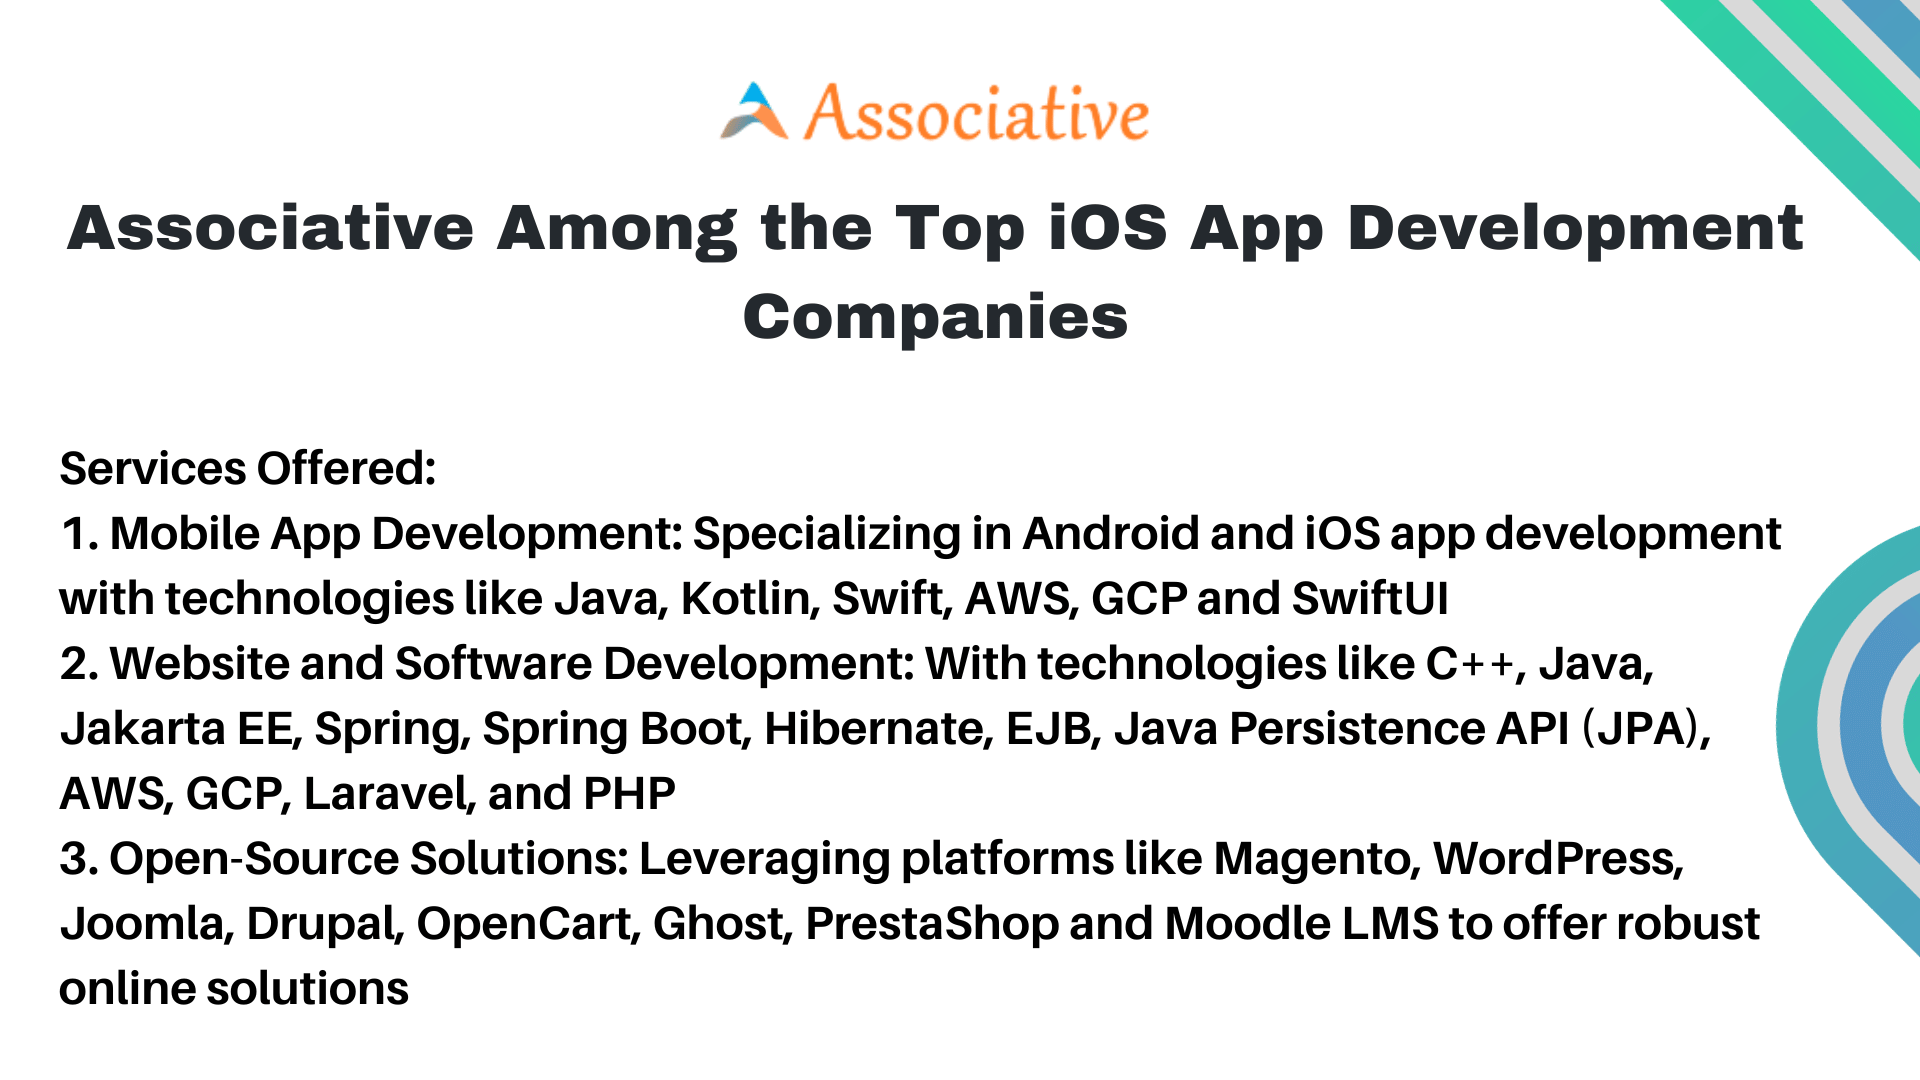 Associative Among the Top iOS App Development Companies